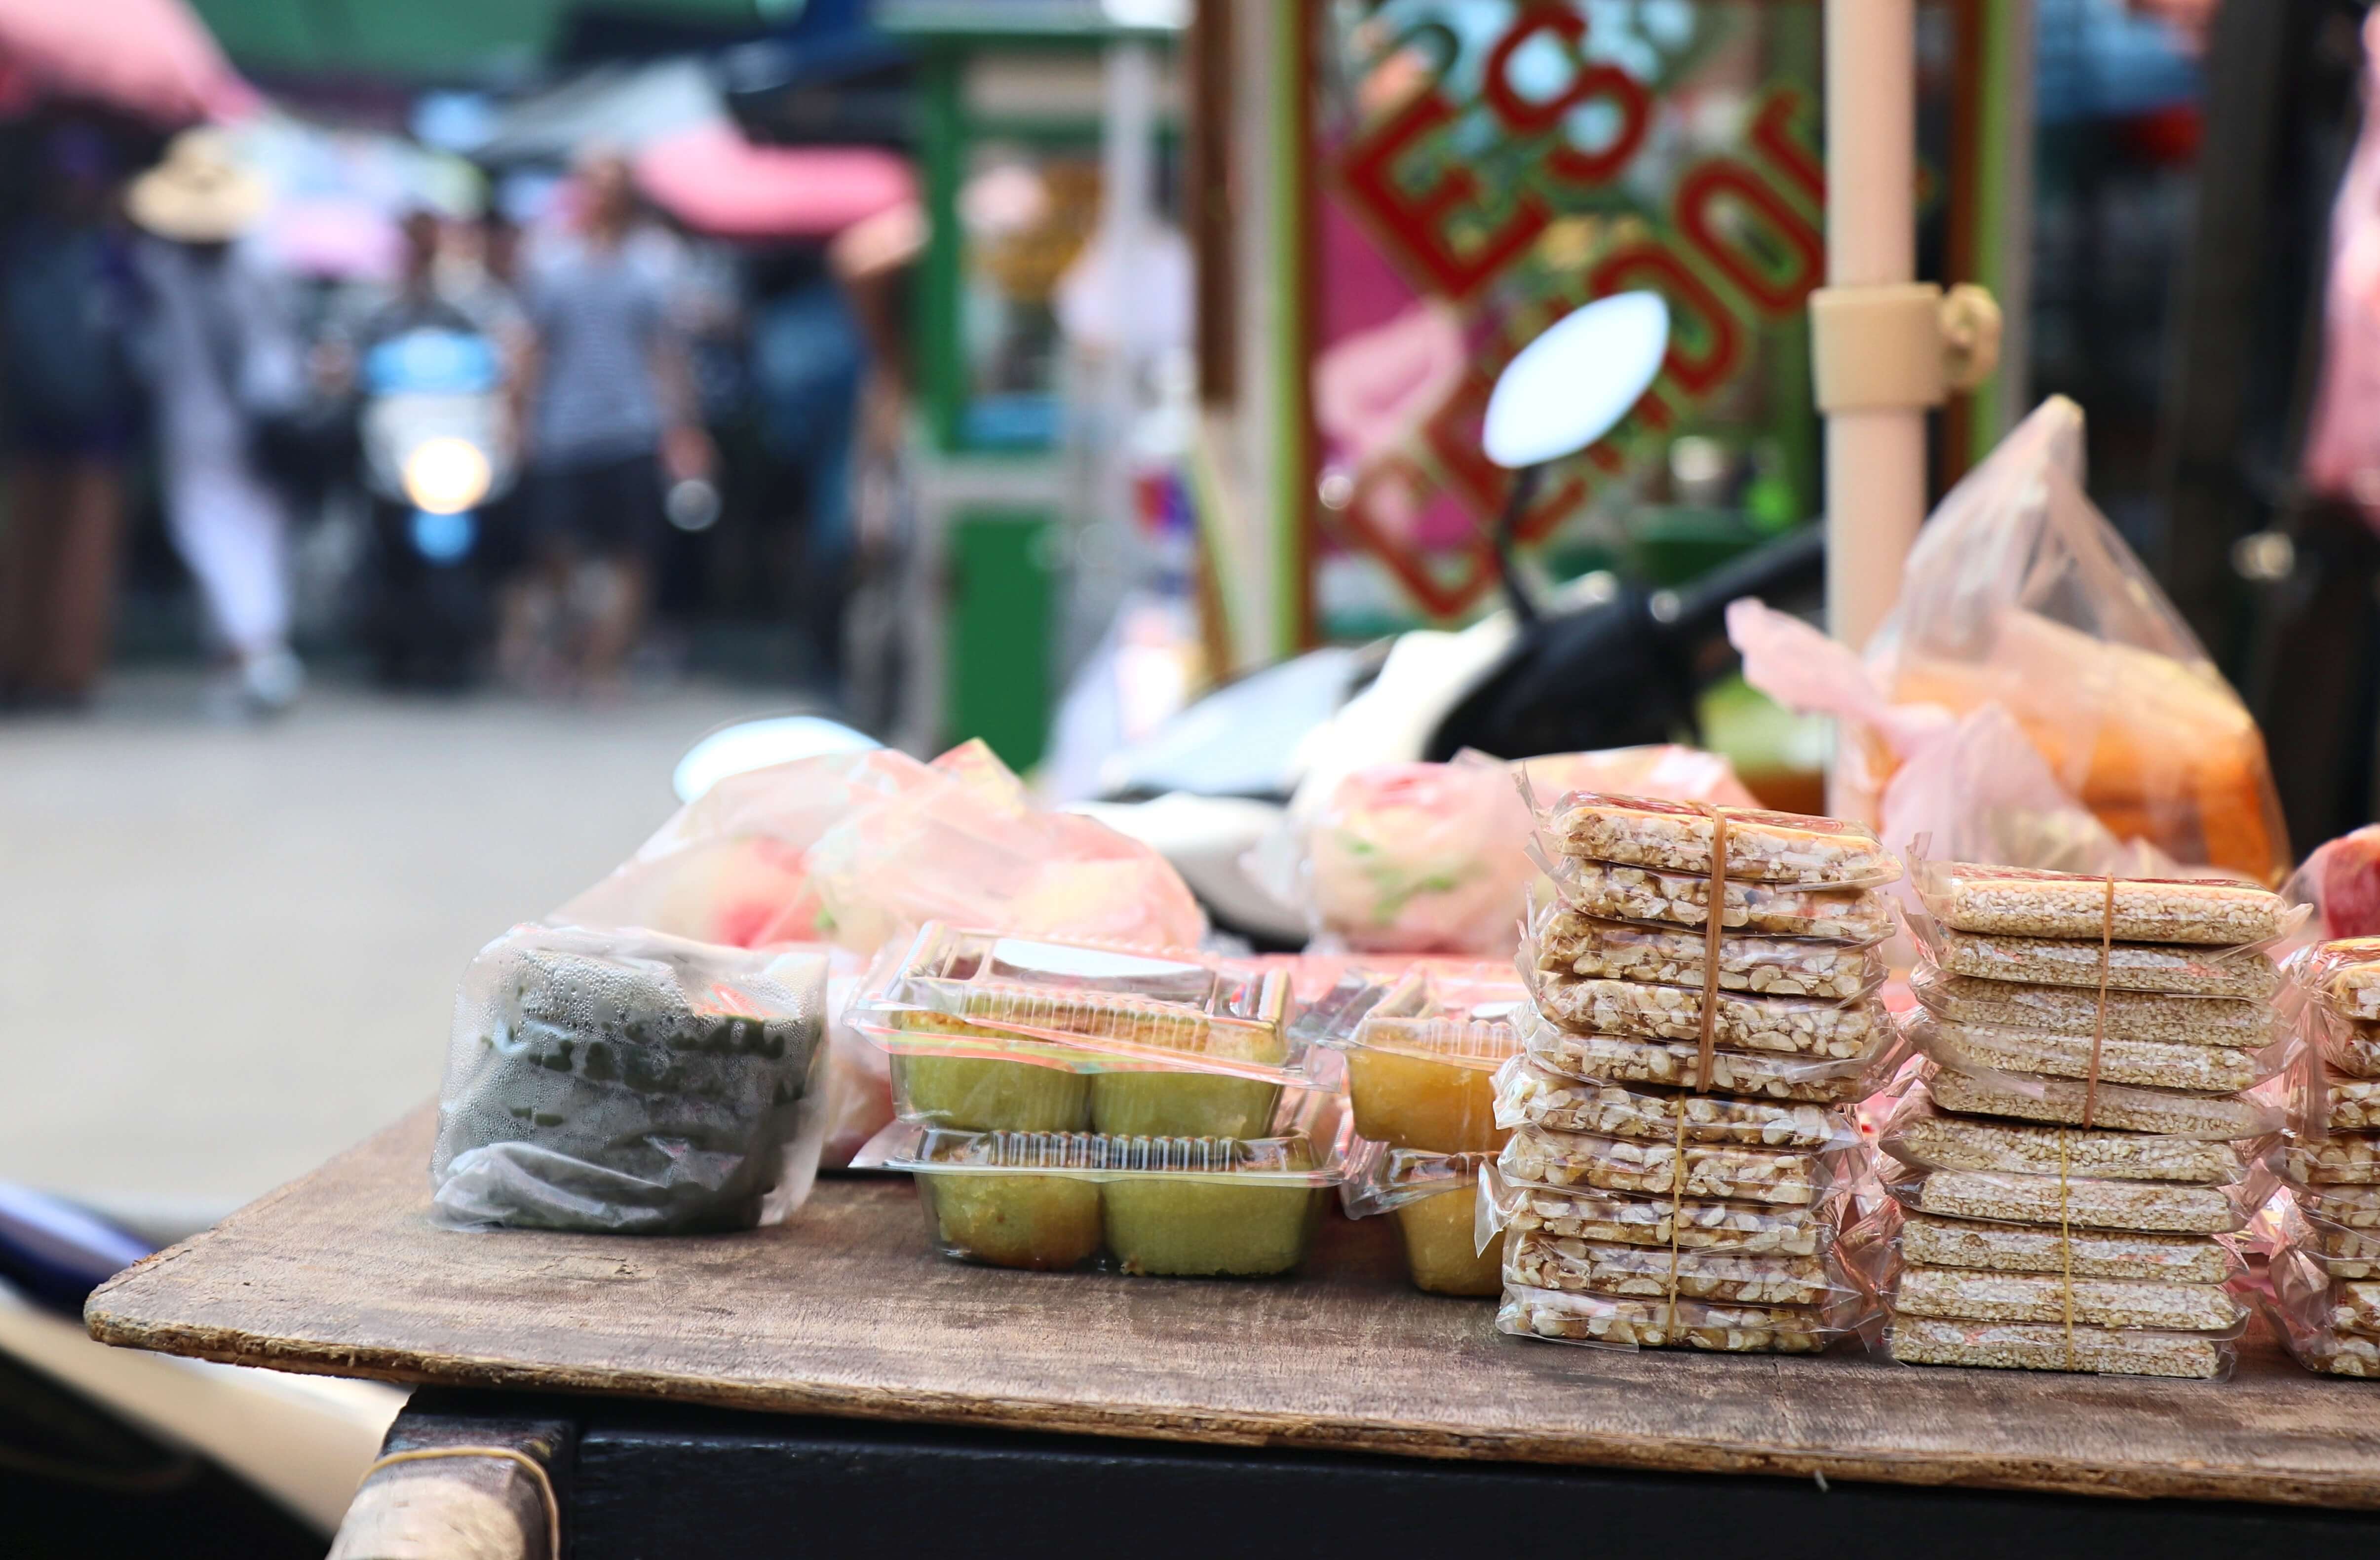 Street Vendors in Jakarta: A Culture Built on Self-Employment